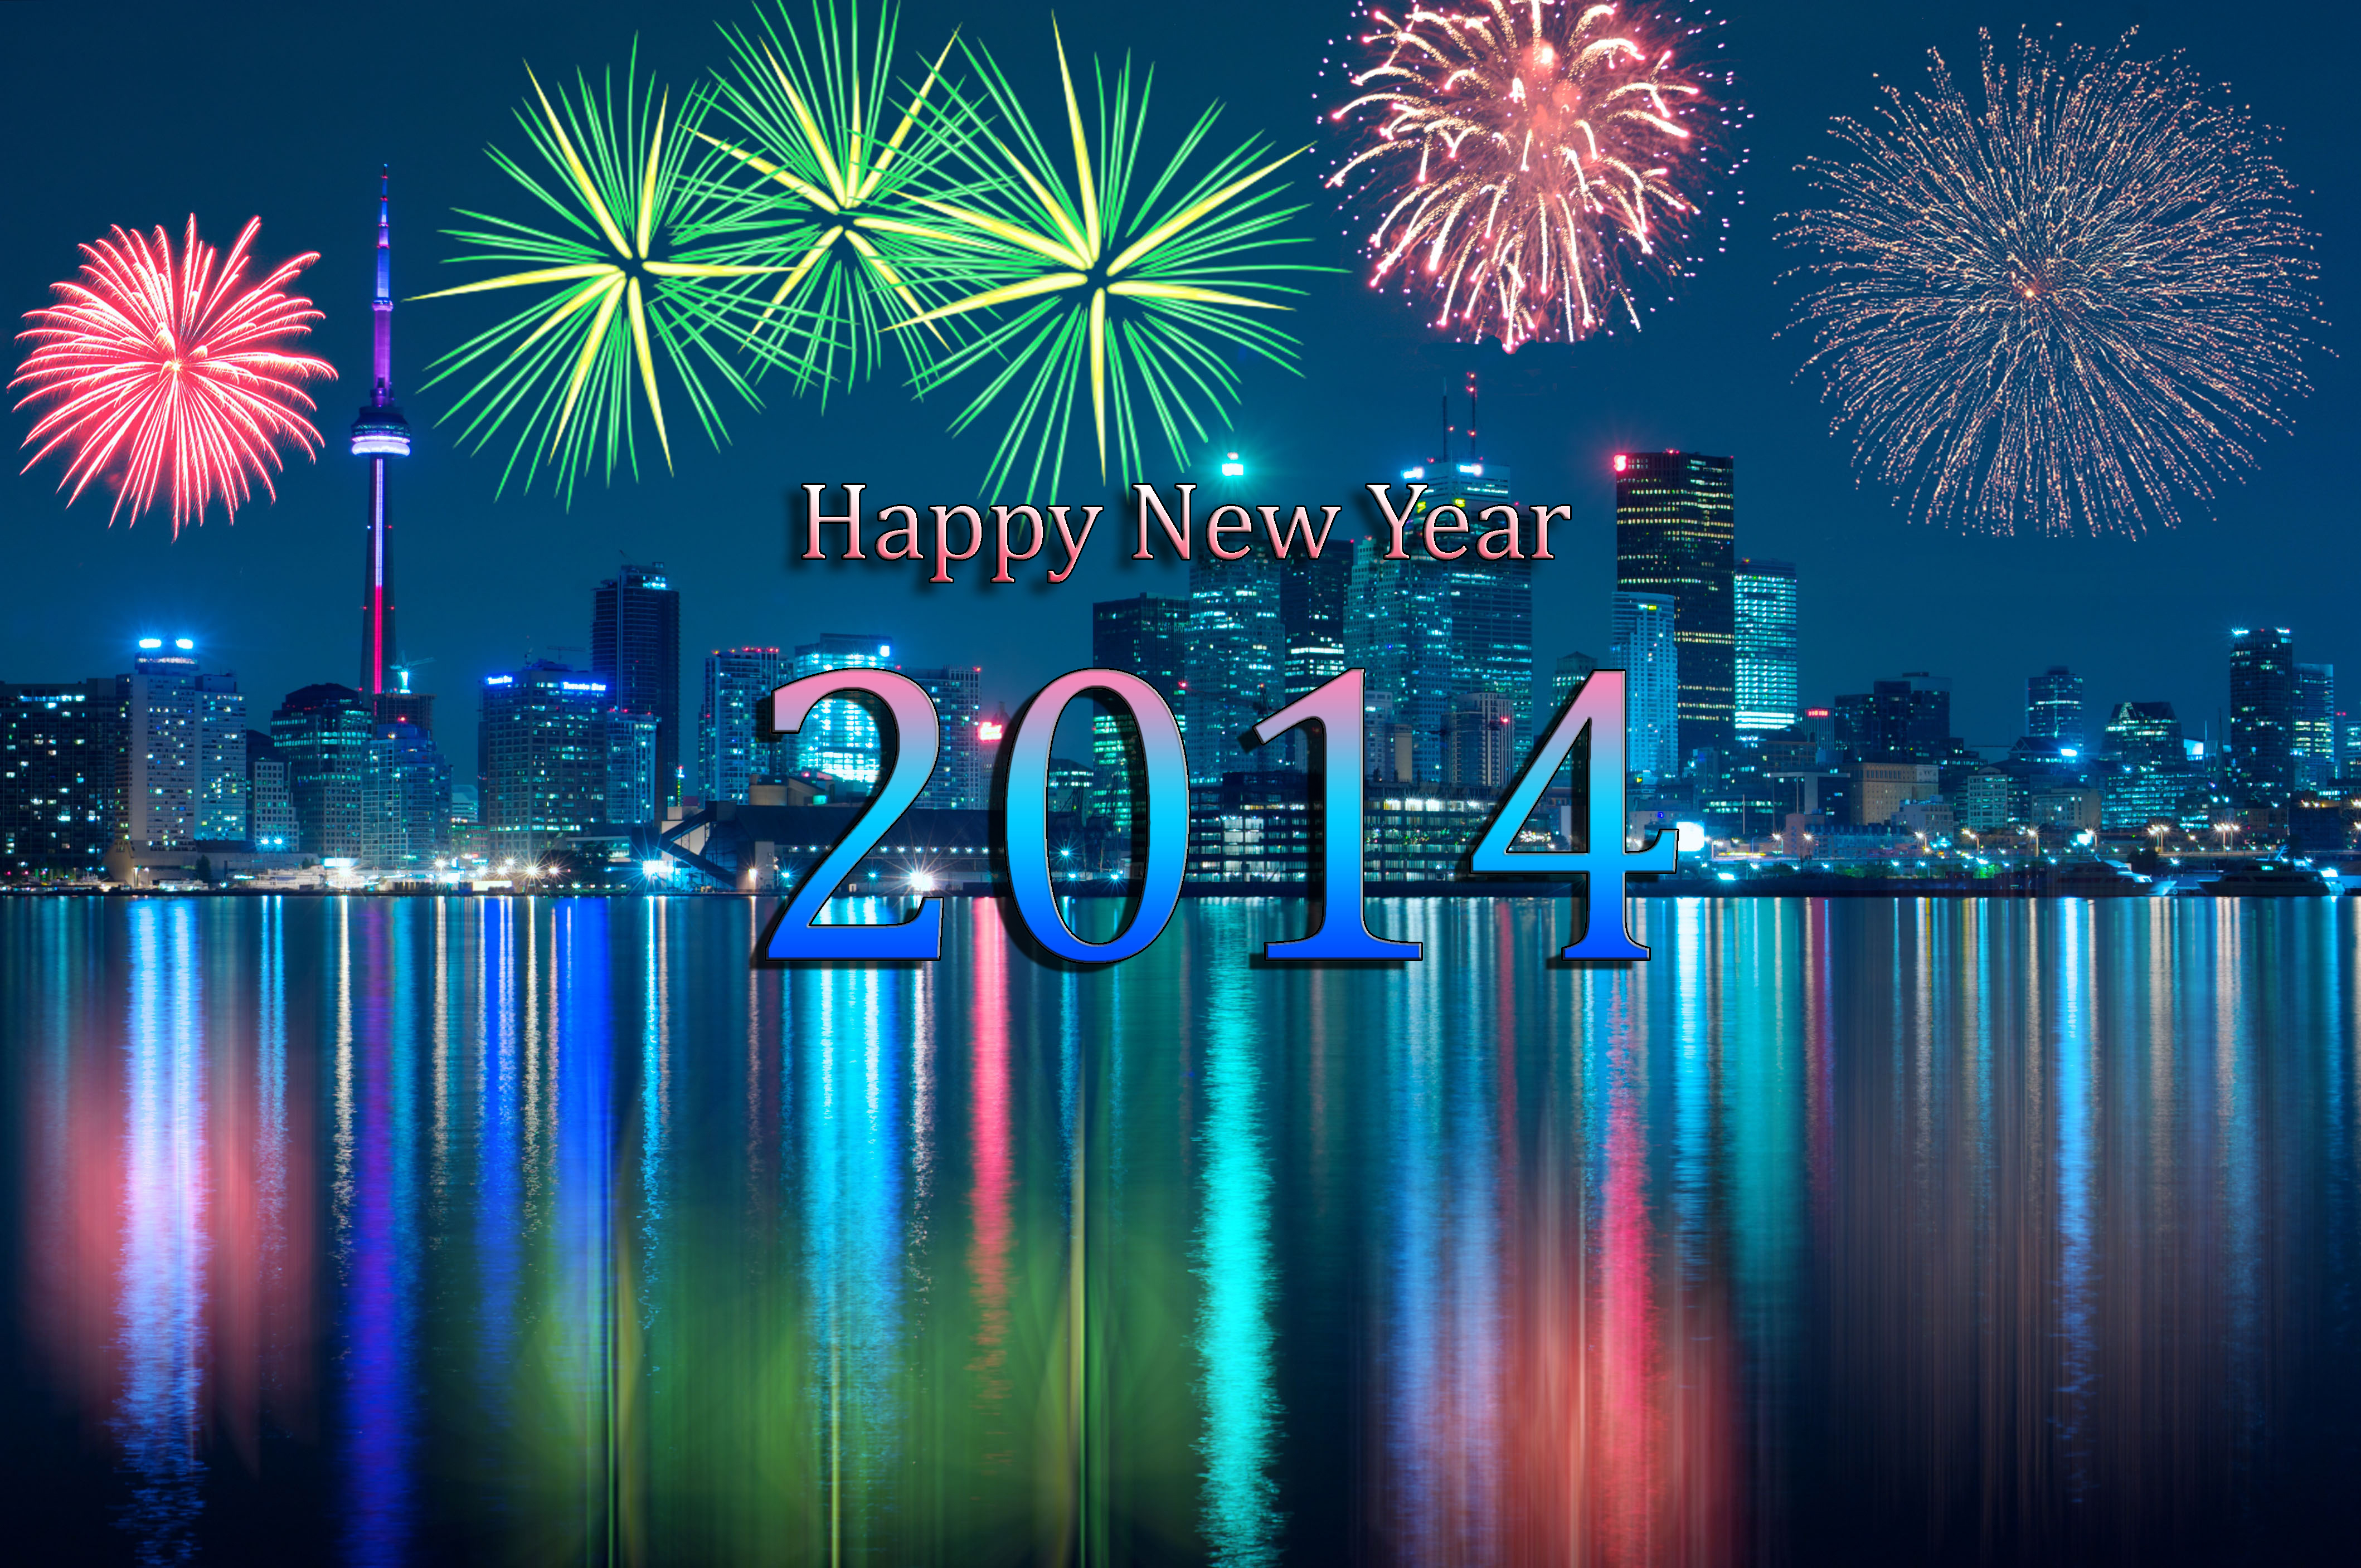 Happy-New-Year-2014-Free-Wallpaper